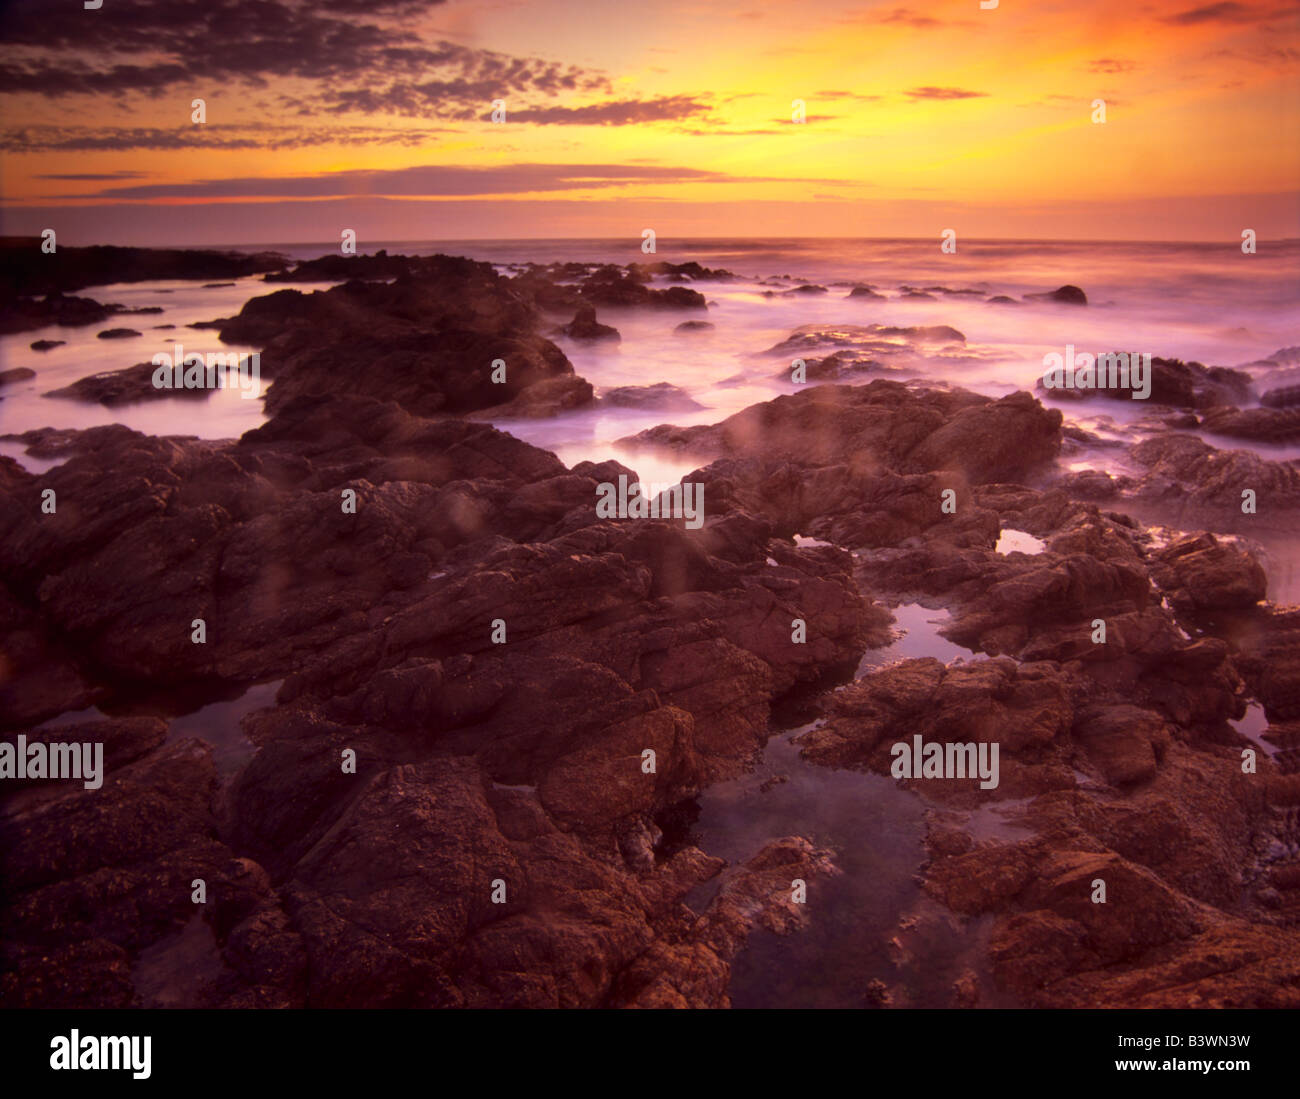 South America, Uruguay, Punta del Este. Sunrise over the South Atlantic. Stock Photo